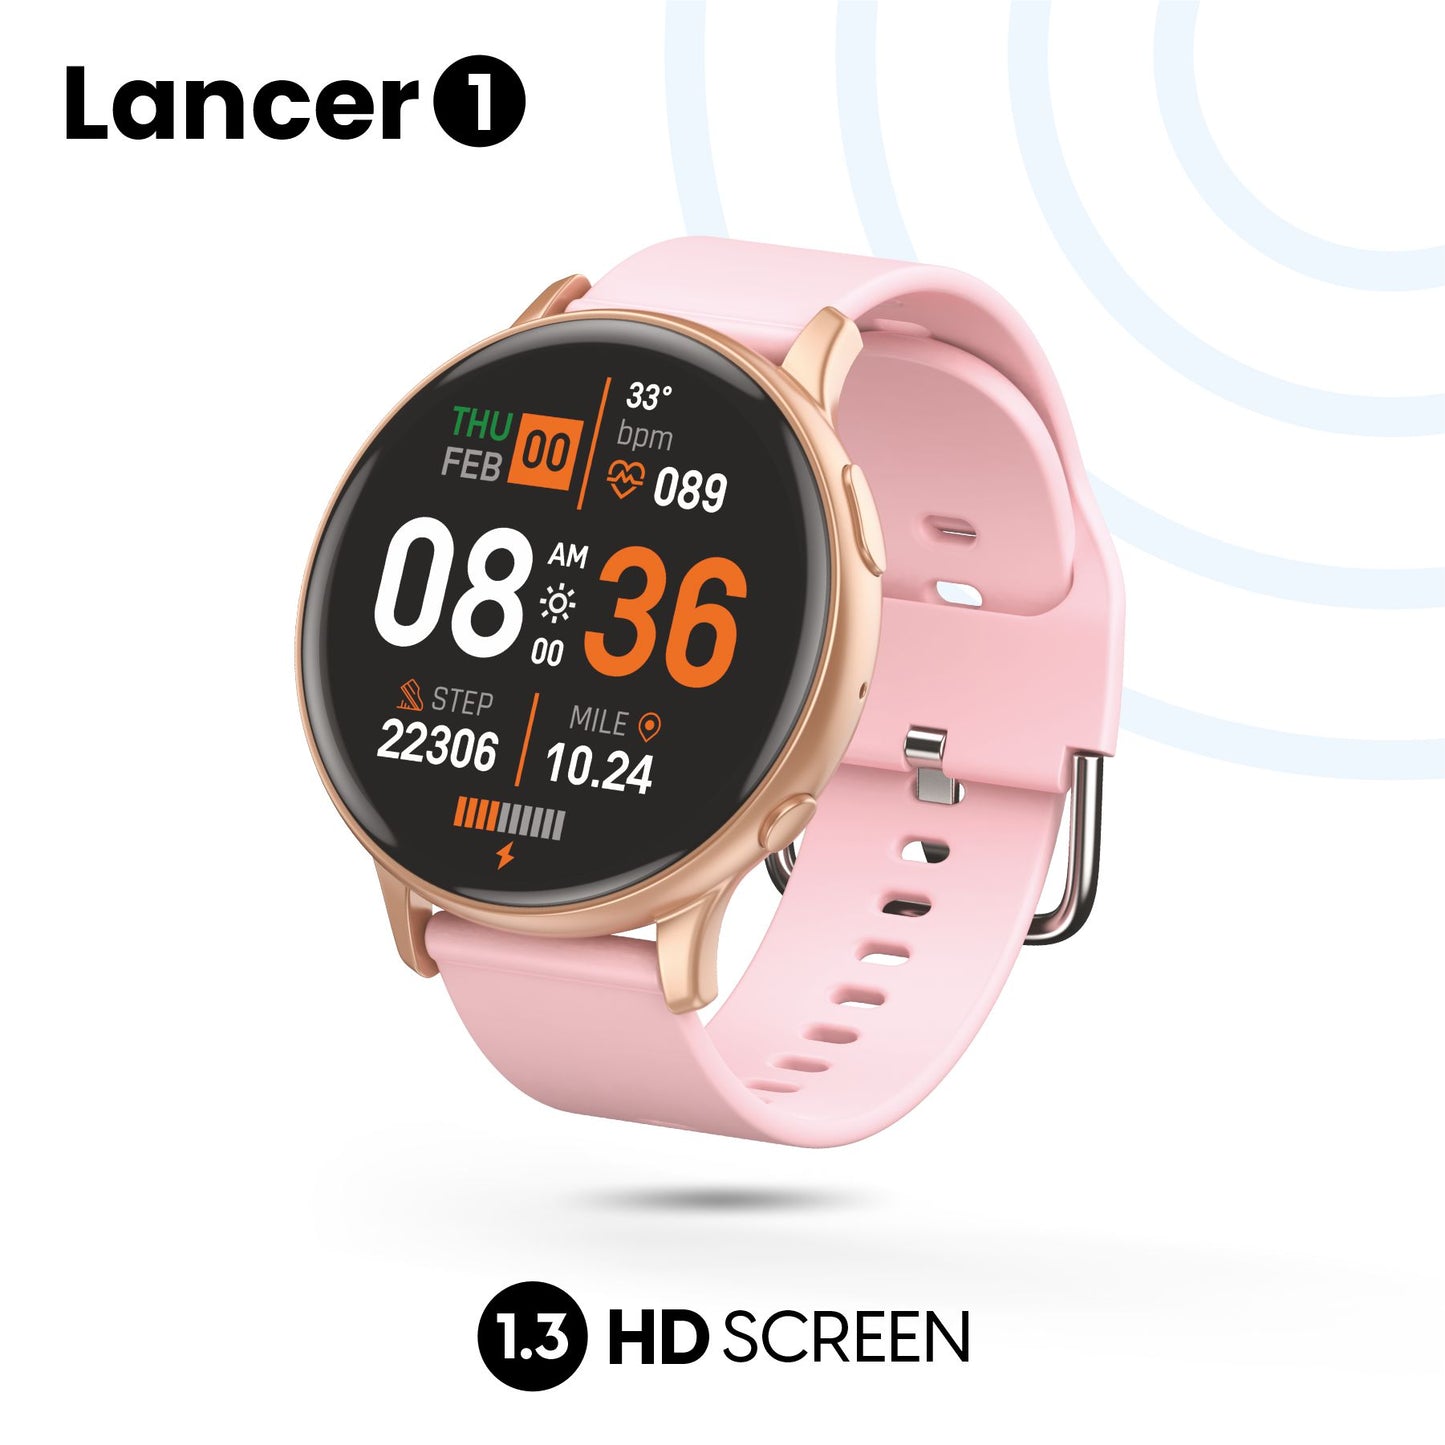 LYNE Lancer 1 Smart Watch 1.3" HD Screen, Bluetooth Calling & IP68 Water Resistance